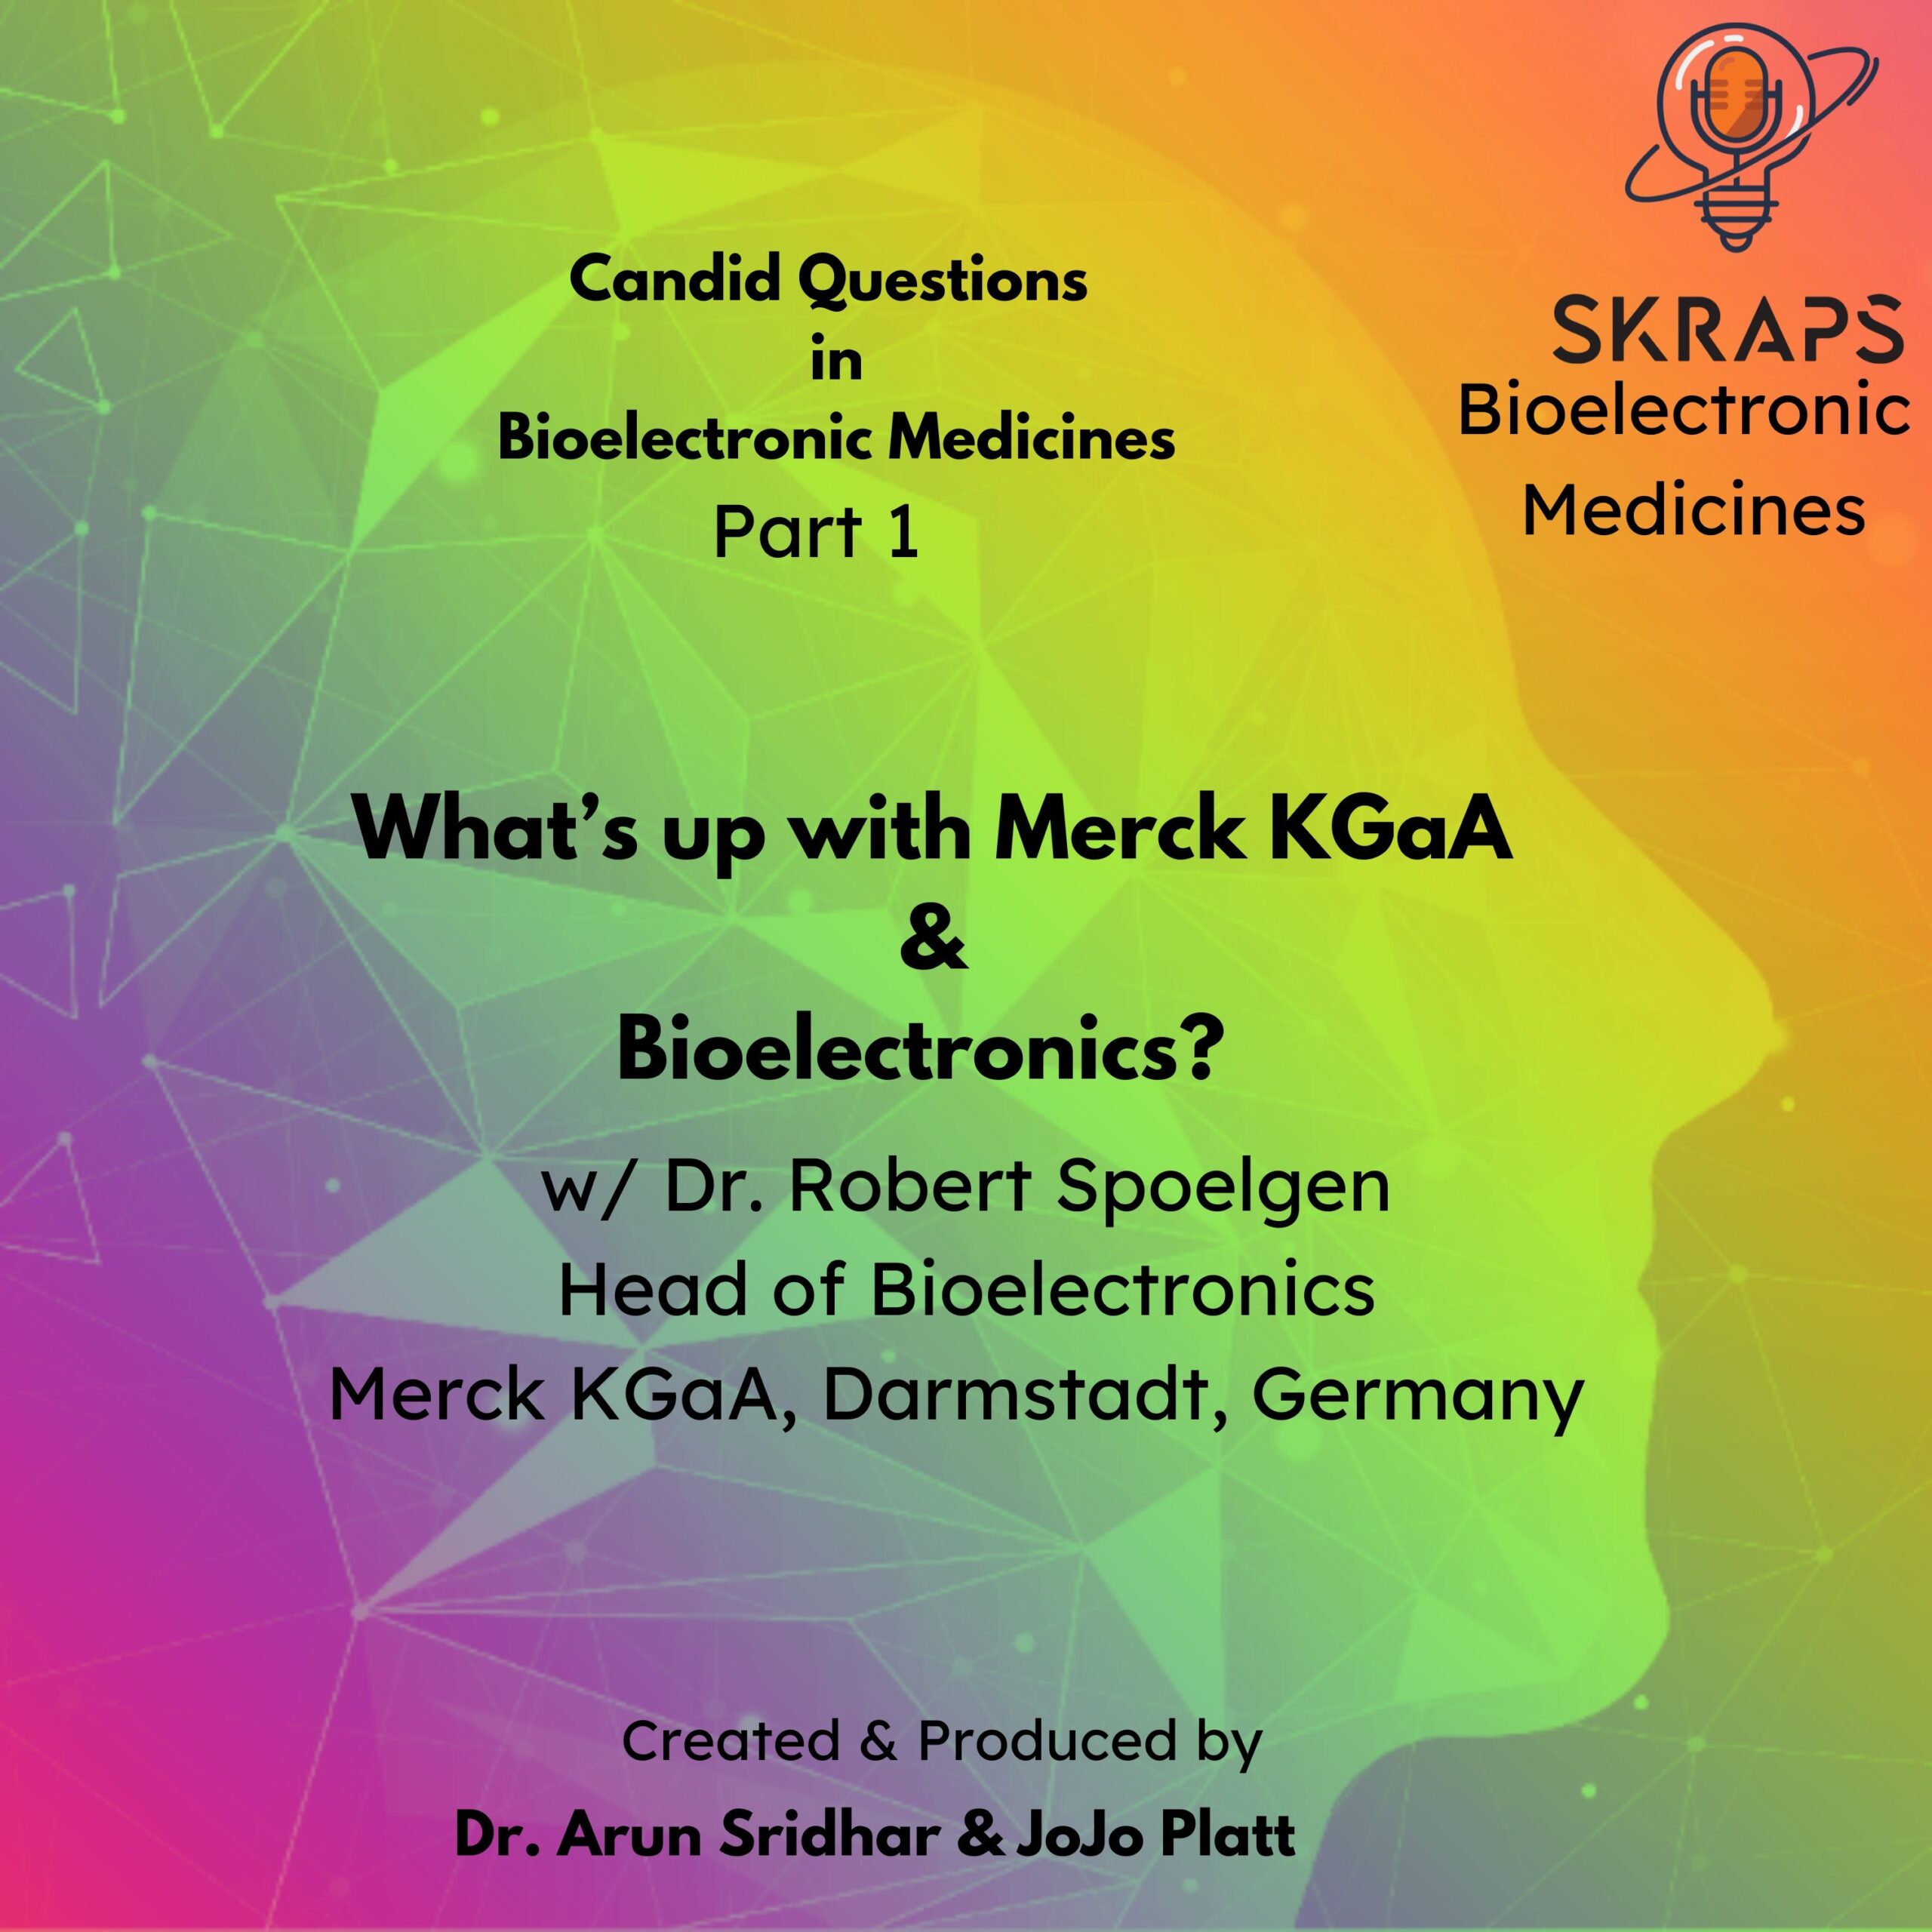 Why did Merck KGaA venture into Bioelectronics?